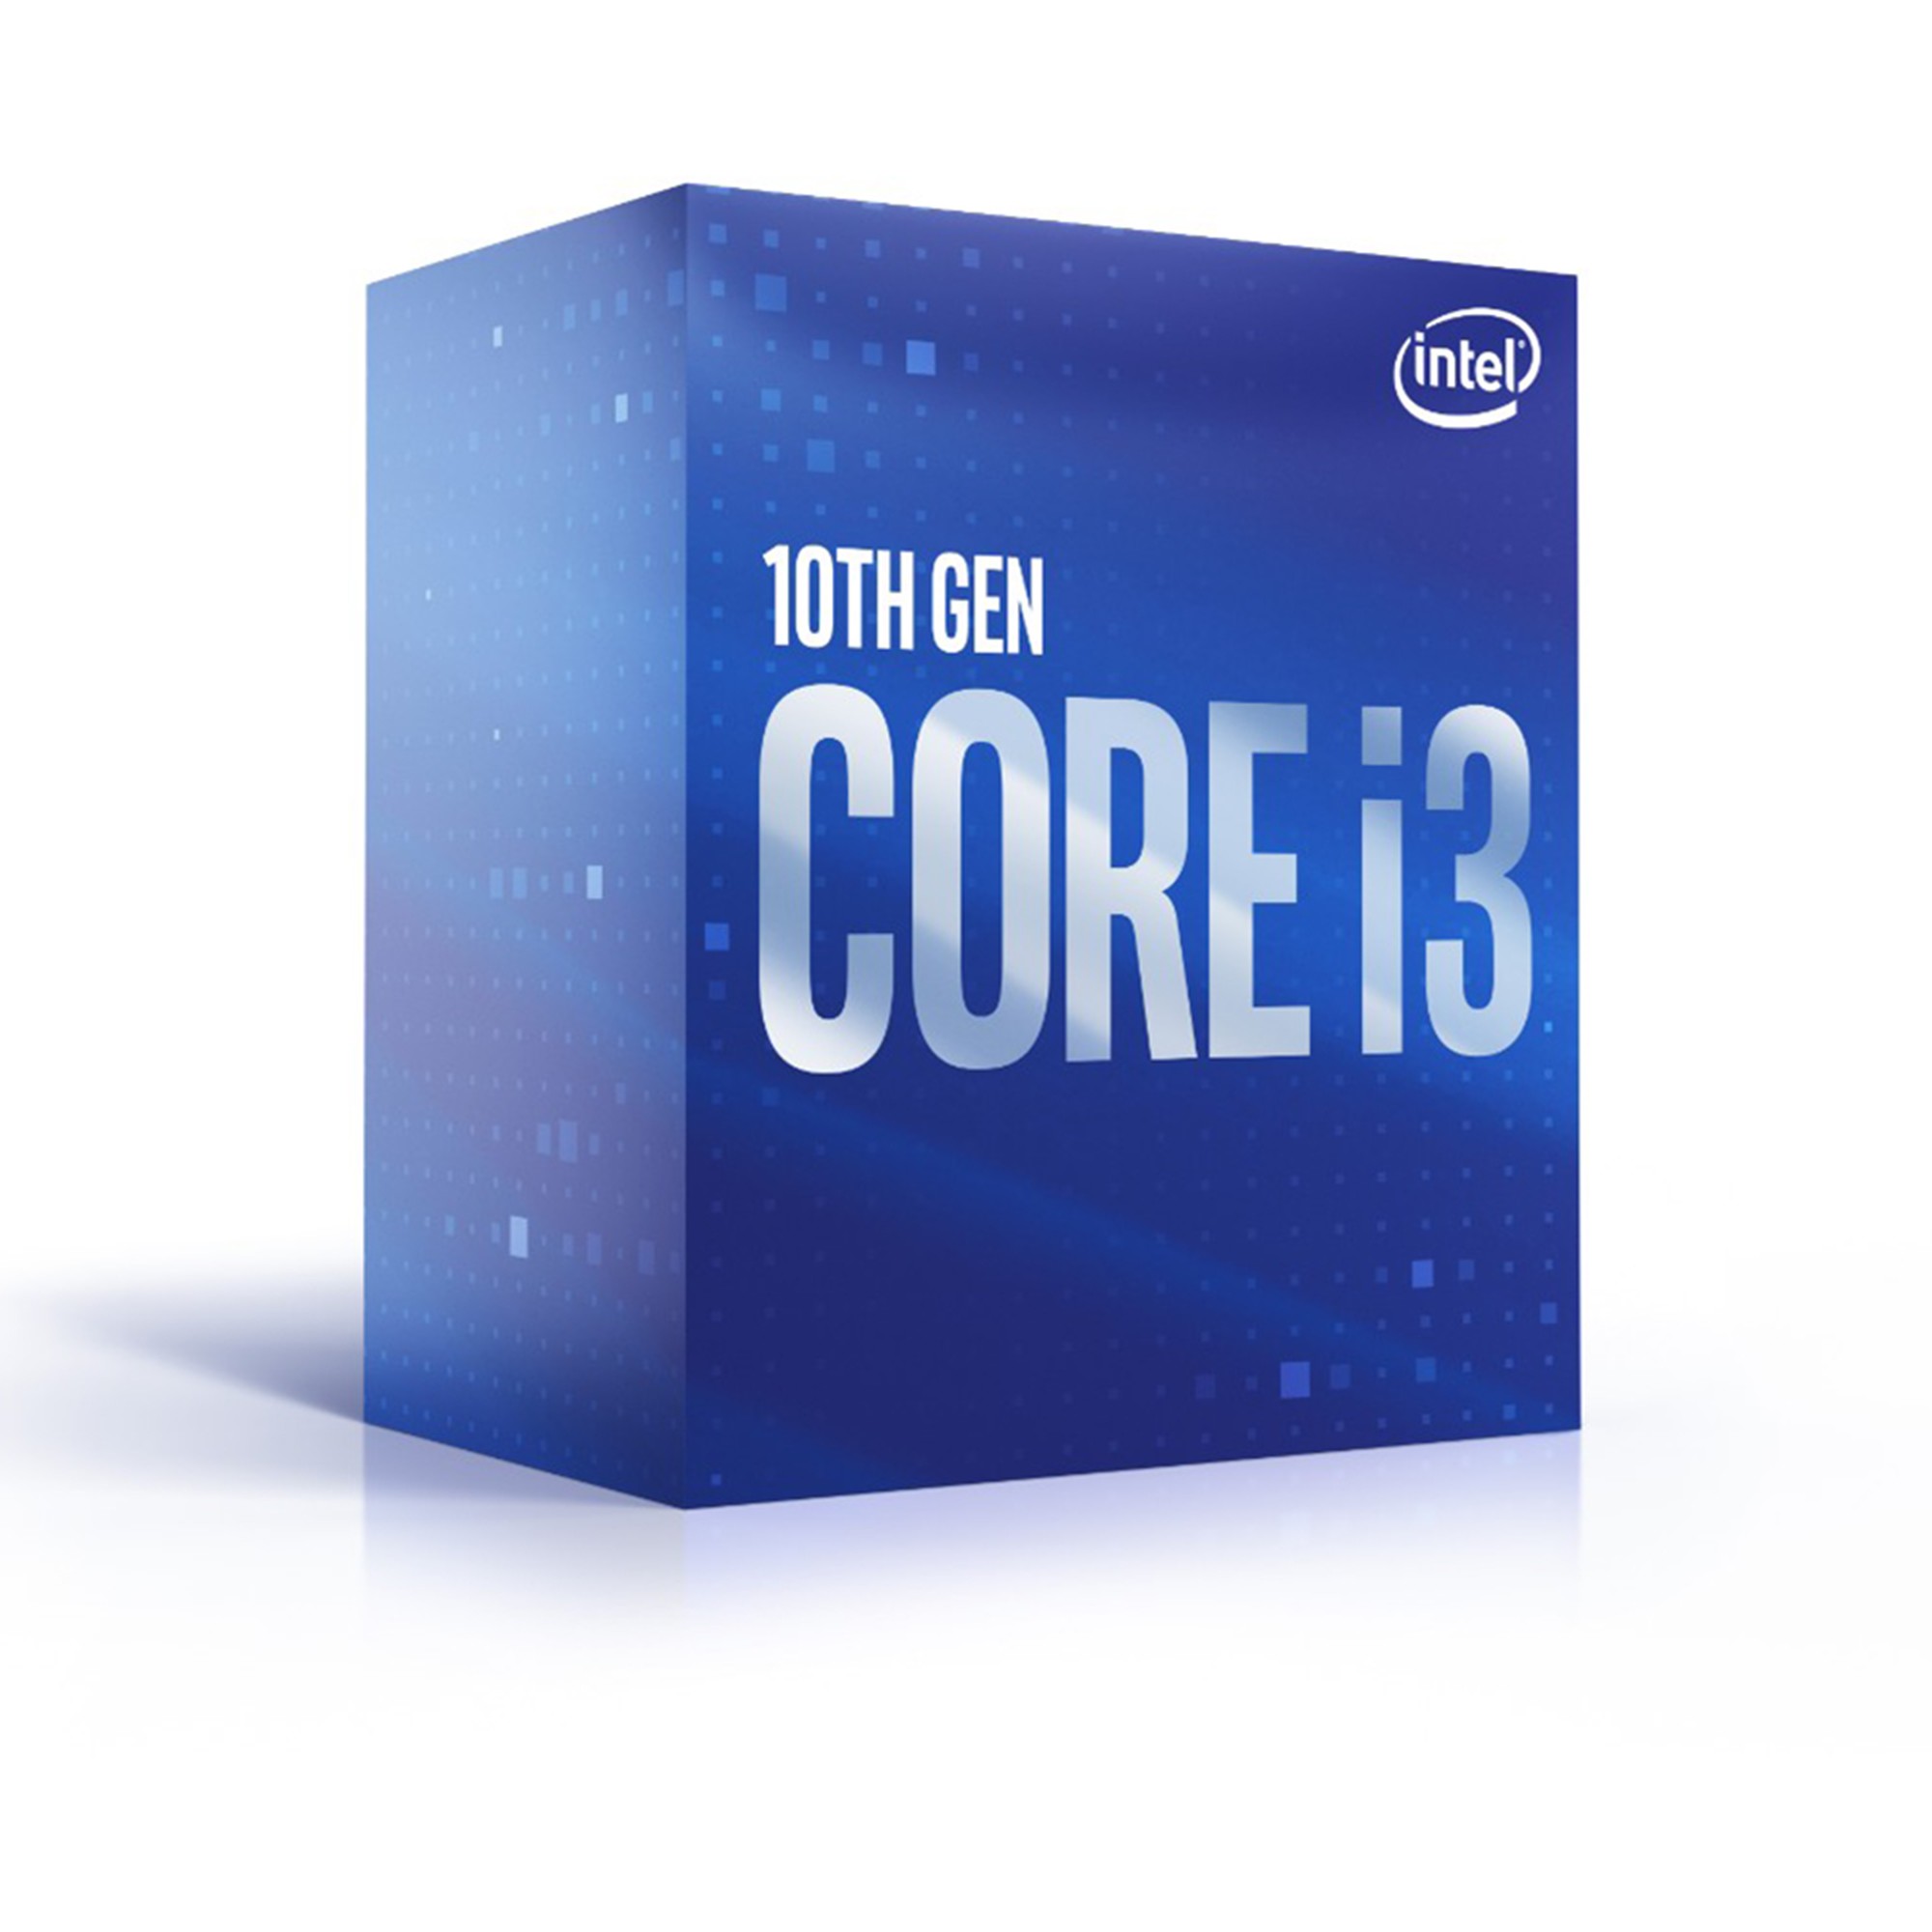 Intel Core i3-10105 processor